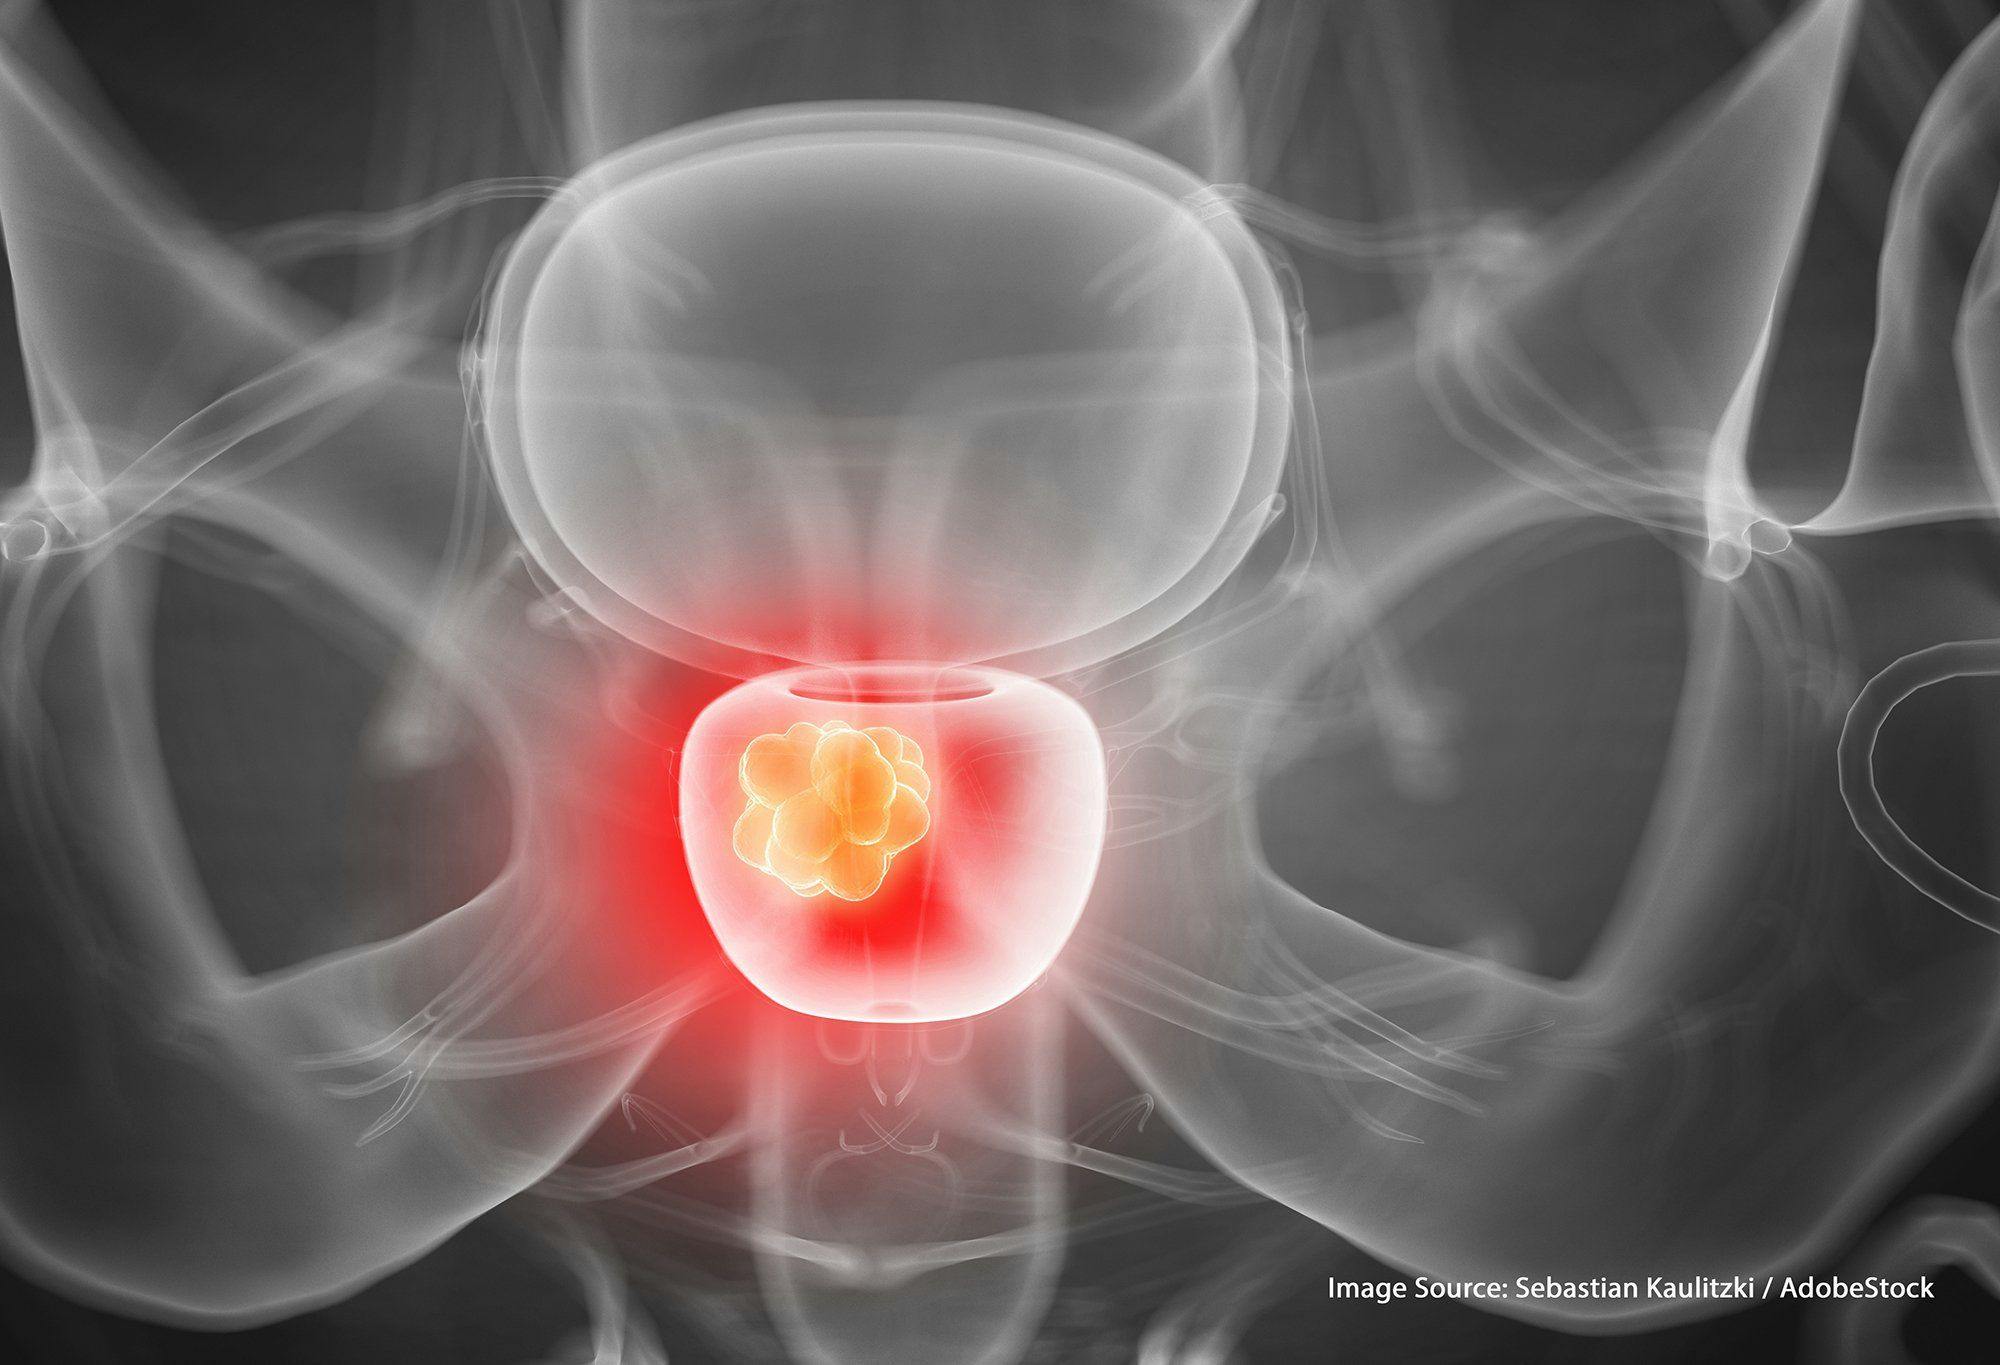 Apalutamide Plus ADT Shows Benefit in Castration-Sensitive Prostate Cancer